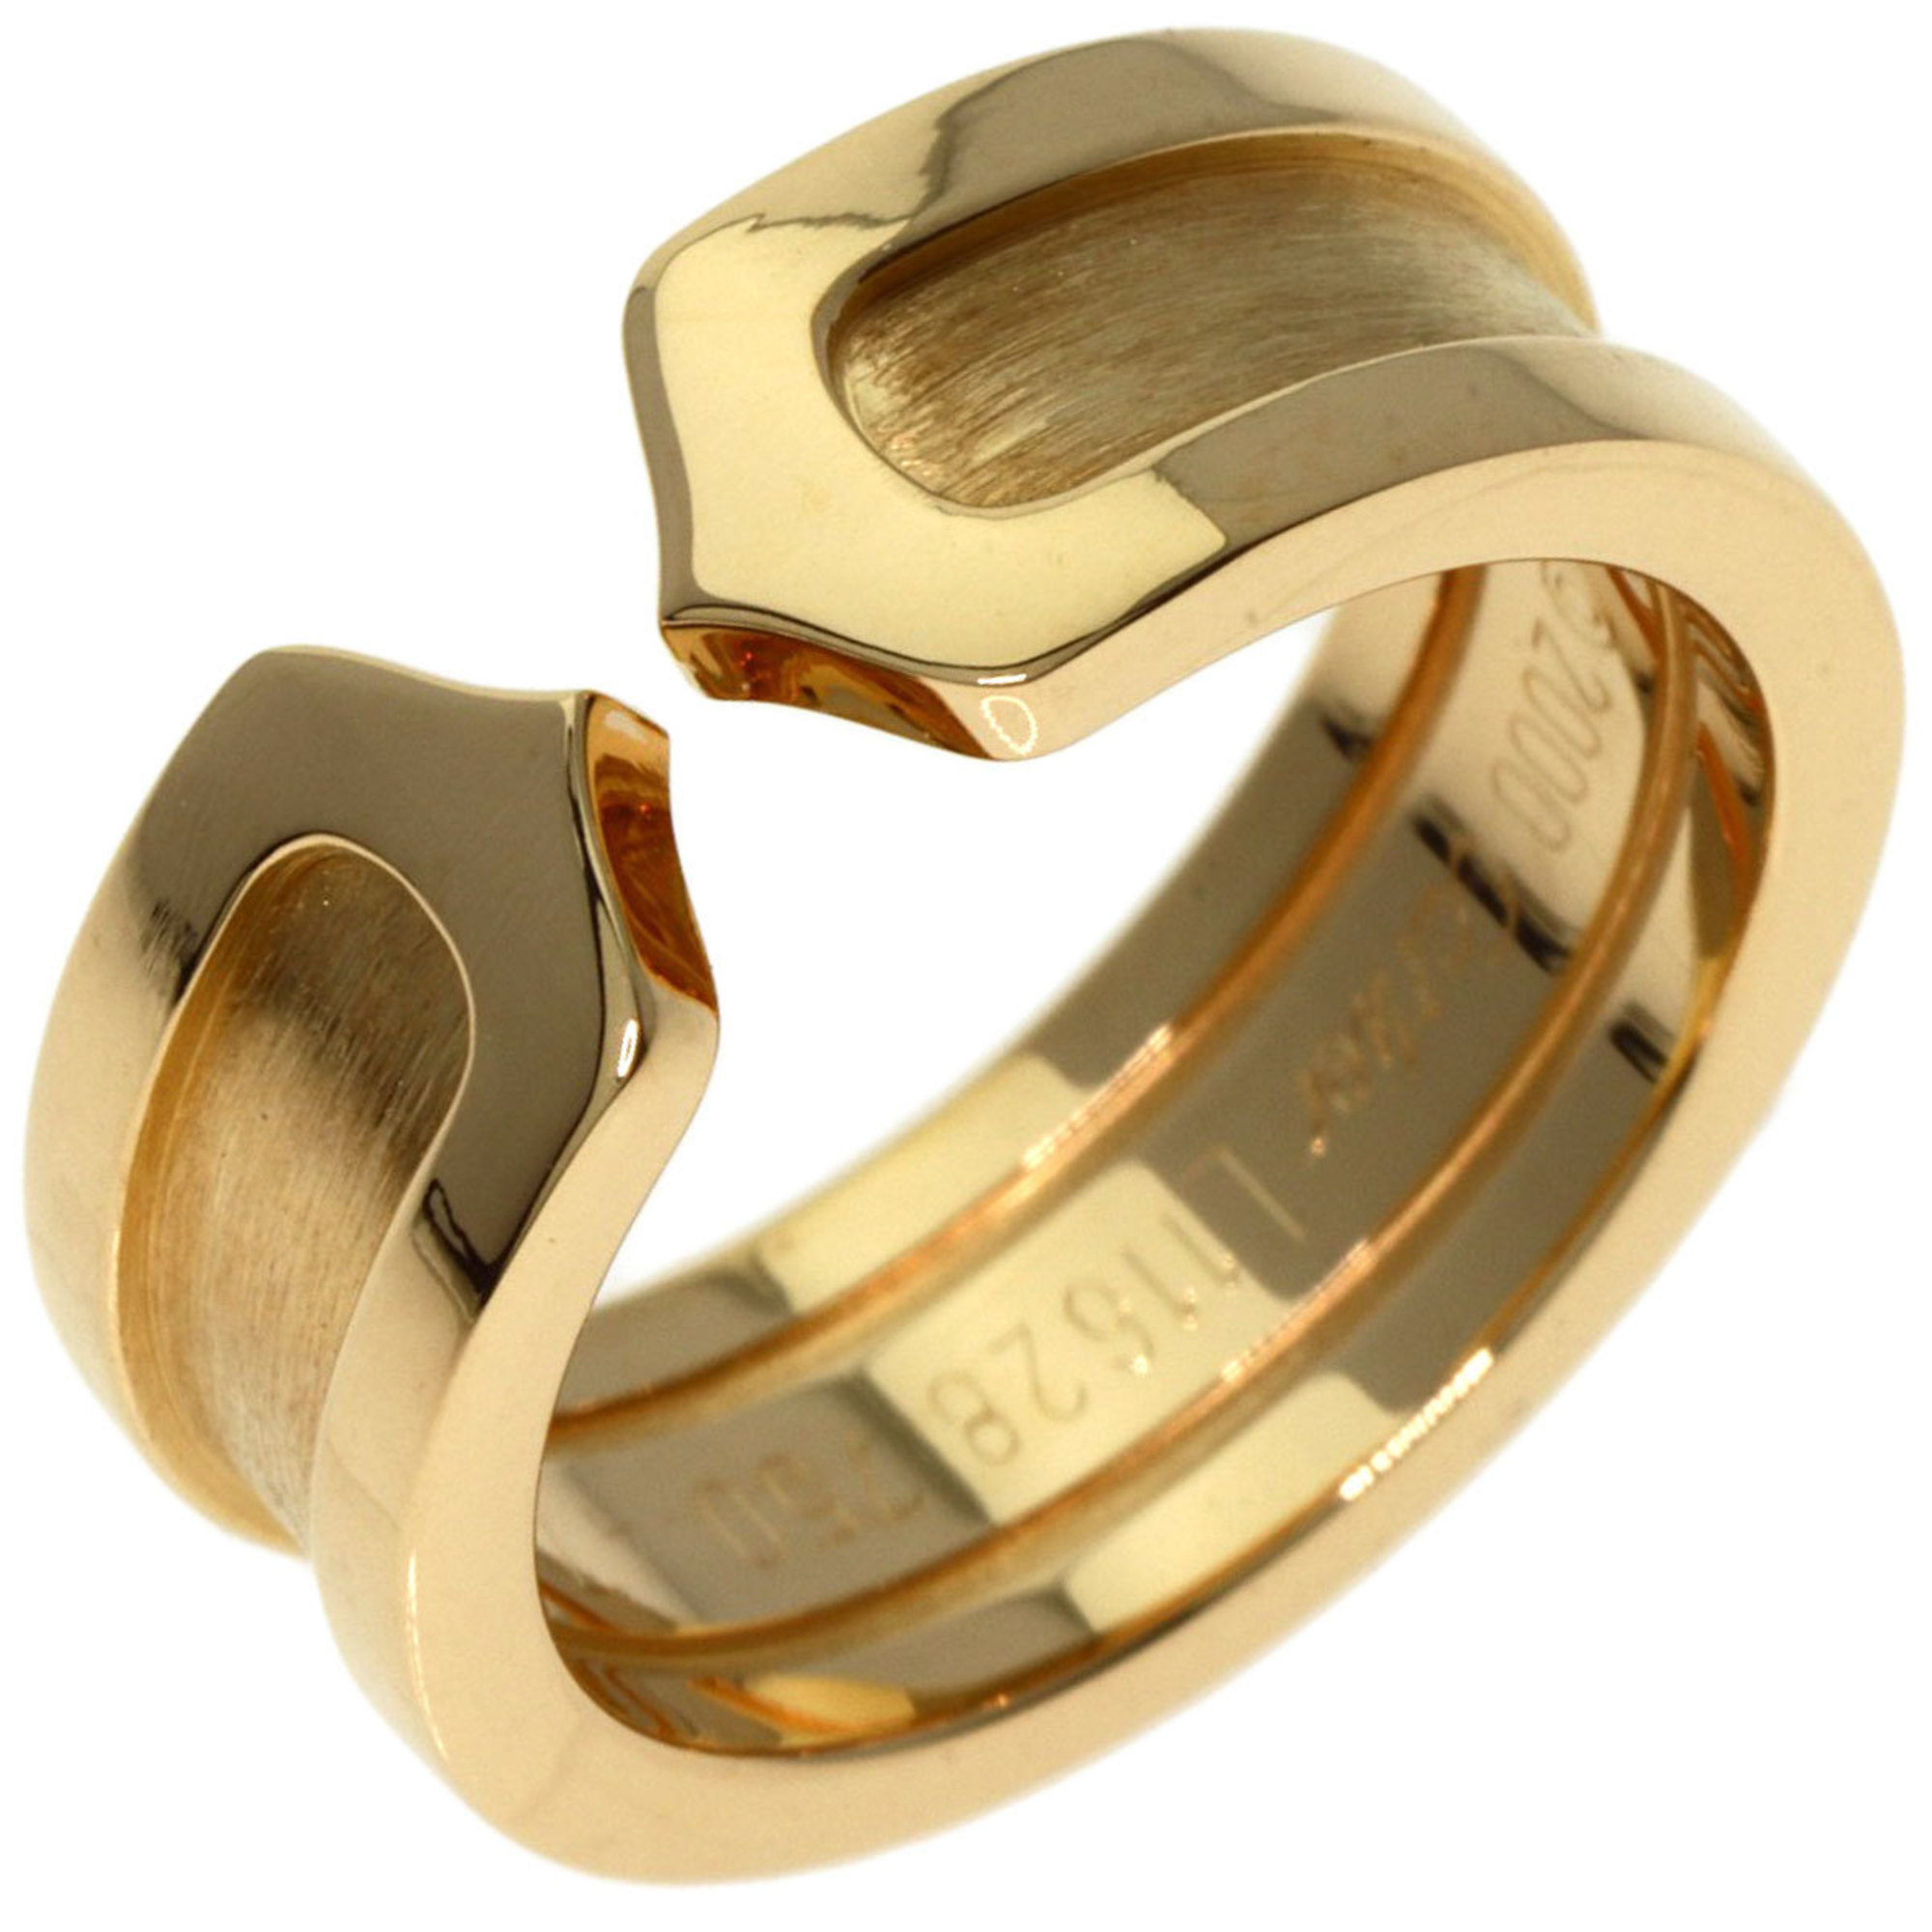 Cartier C2 Ring #47 Ring, 18K Yellow Gold, Women's, CARTIER